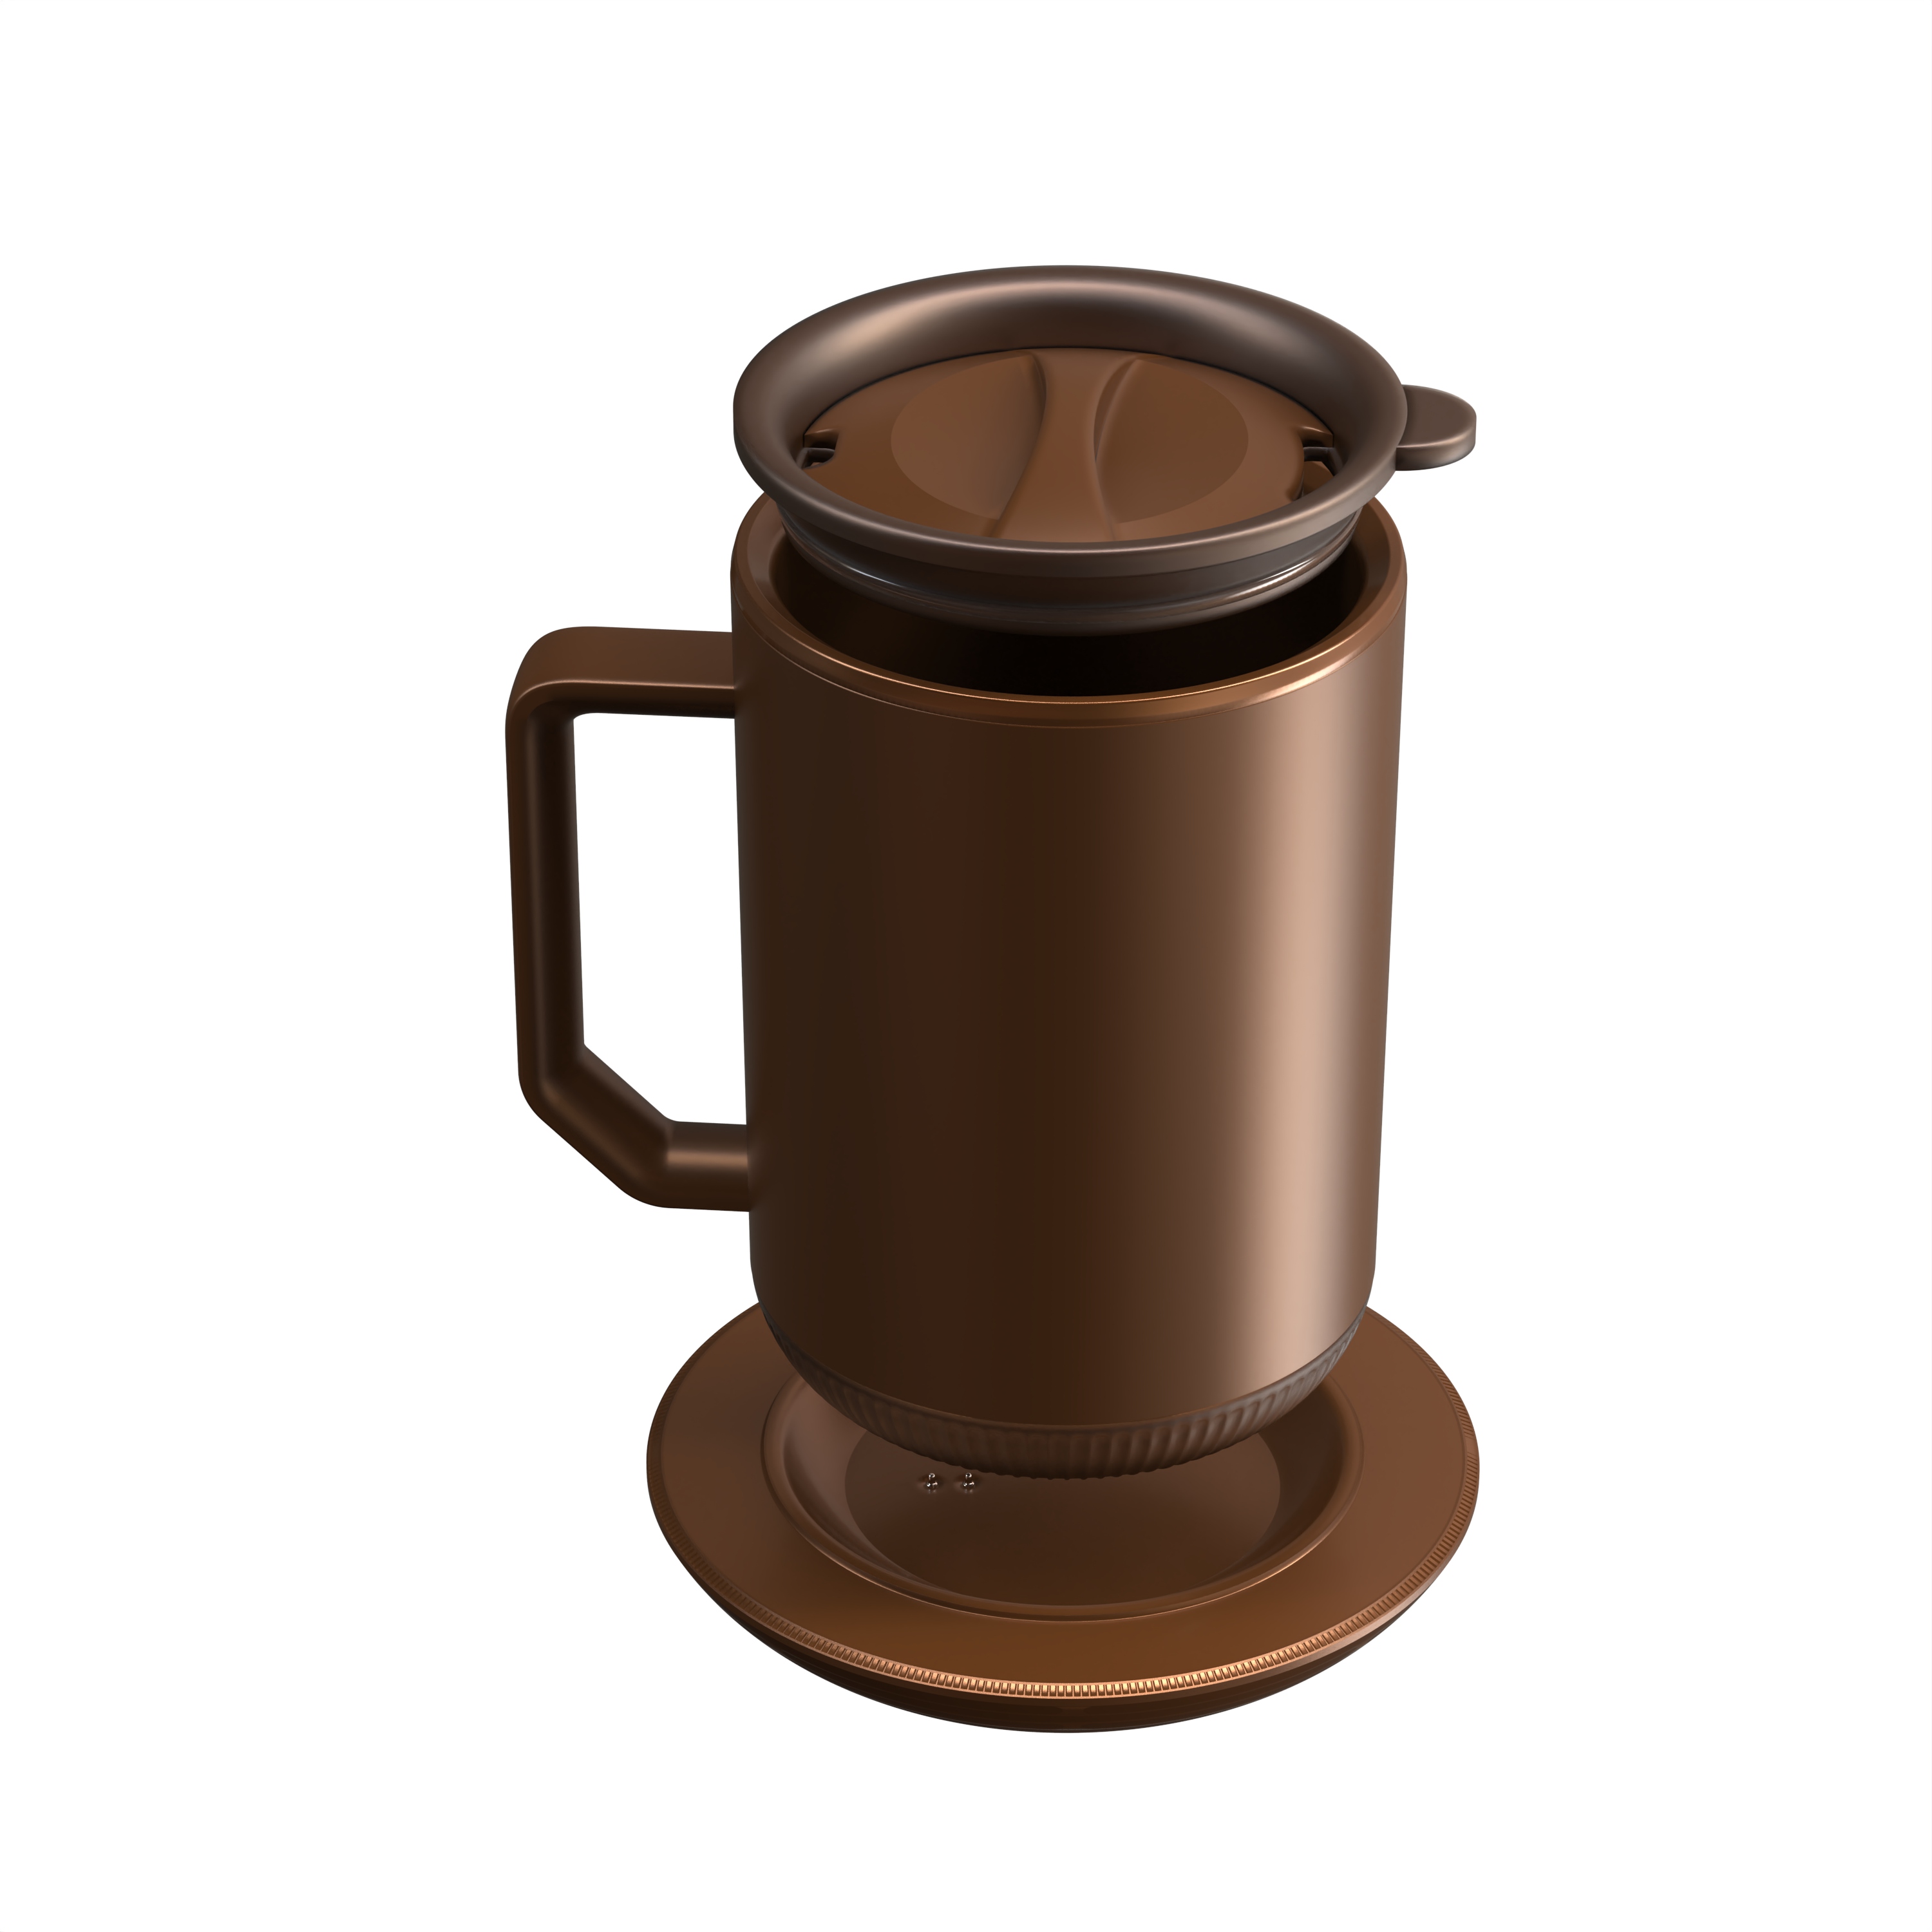 Ionmug & Charging Coaster 12oz. Stainless Steel Self Heating Coffee Mug with Lid, White